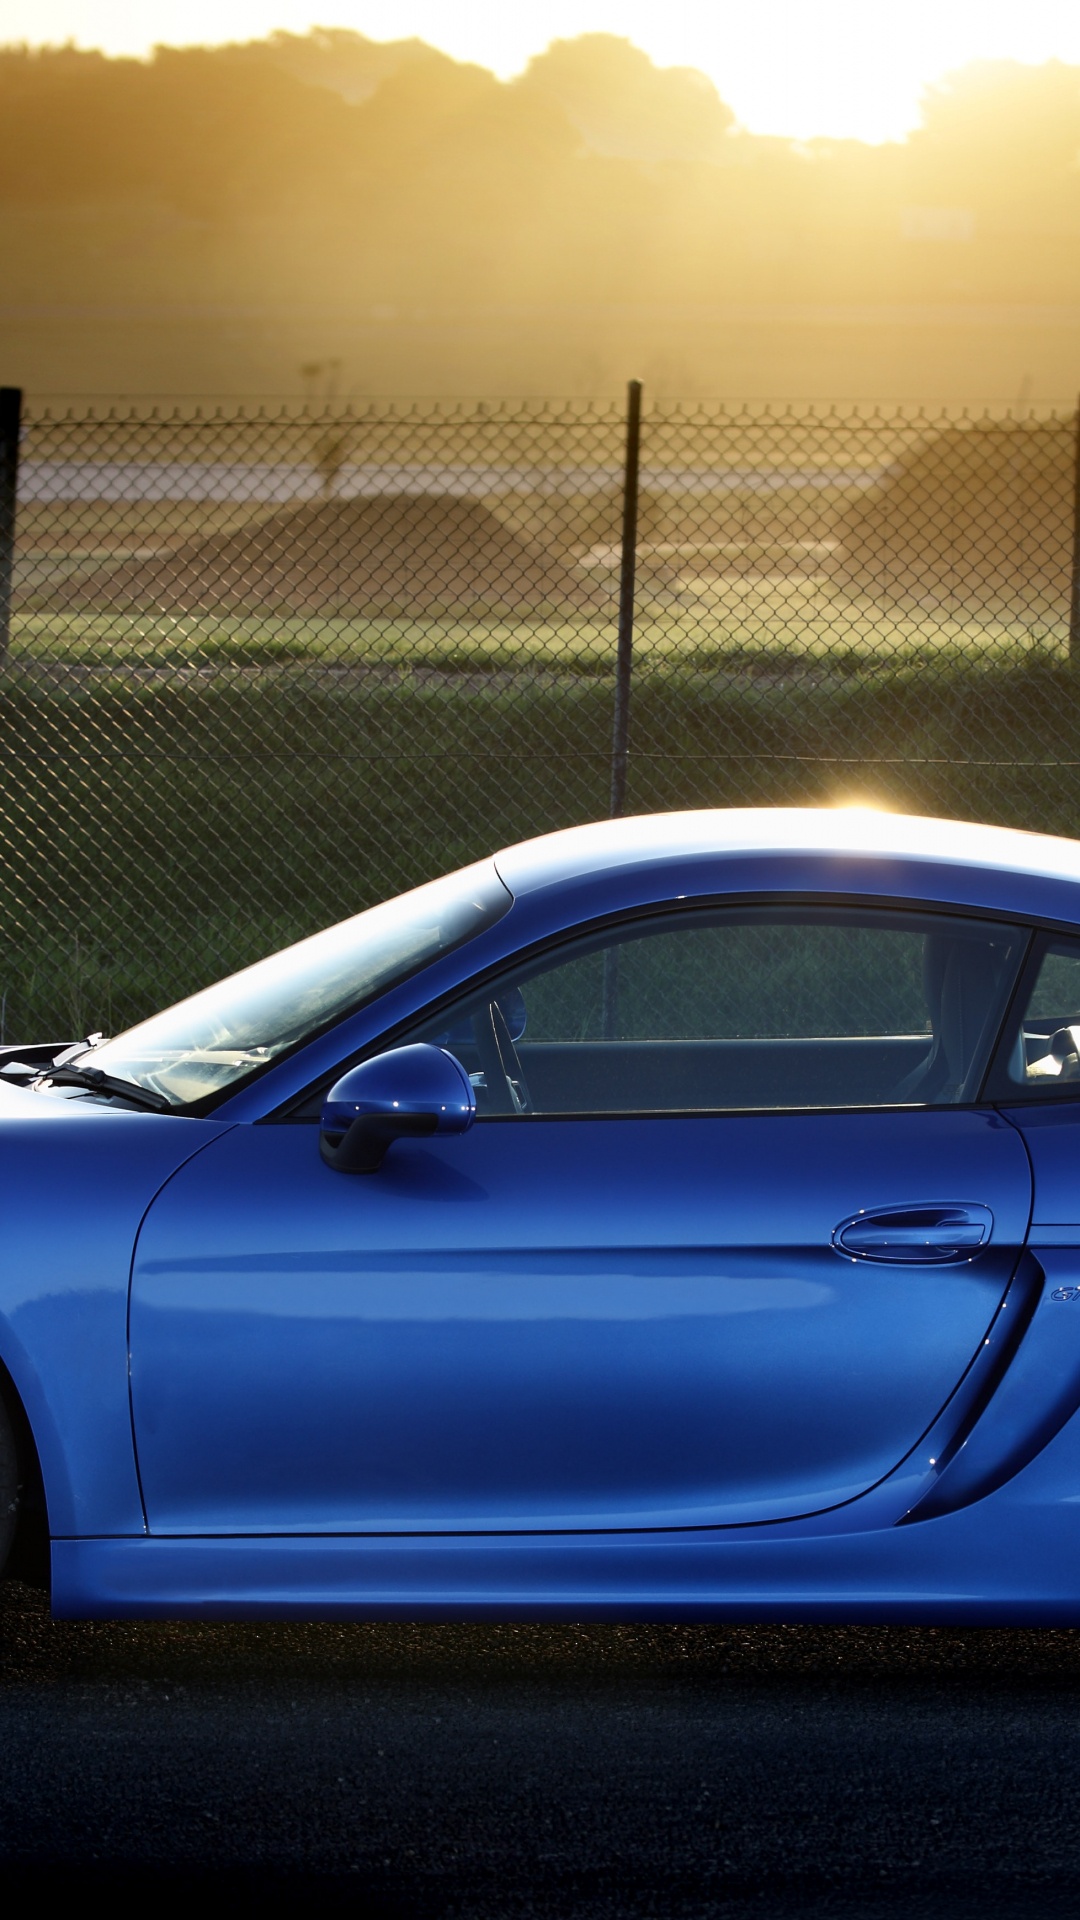 Blue Porsche 911 Parked Near Gray Metal Fence During Daytime. Wallpaper in 1080x1920 Resolution